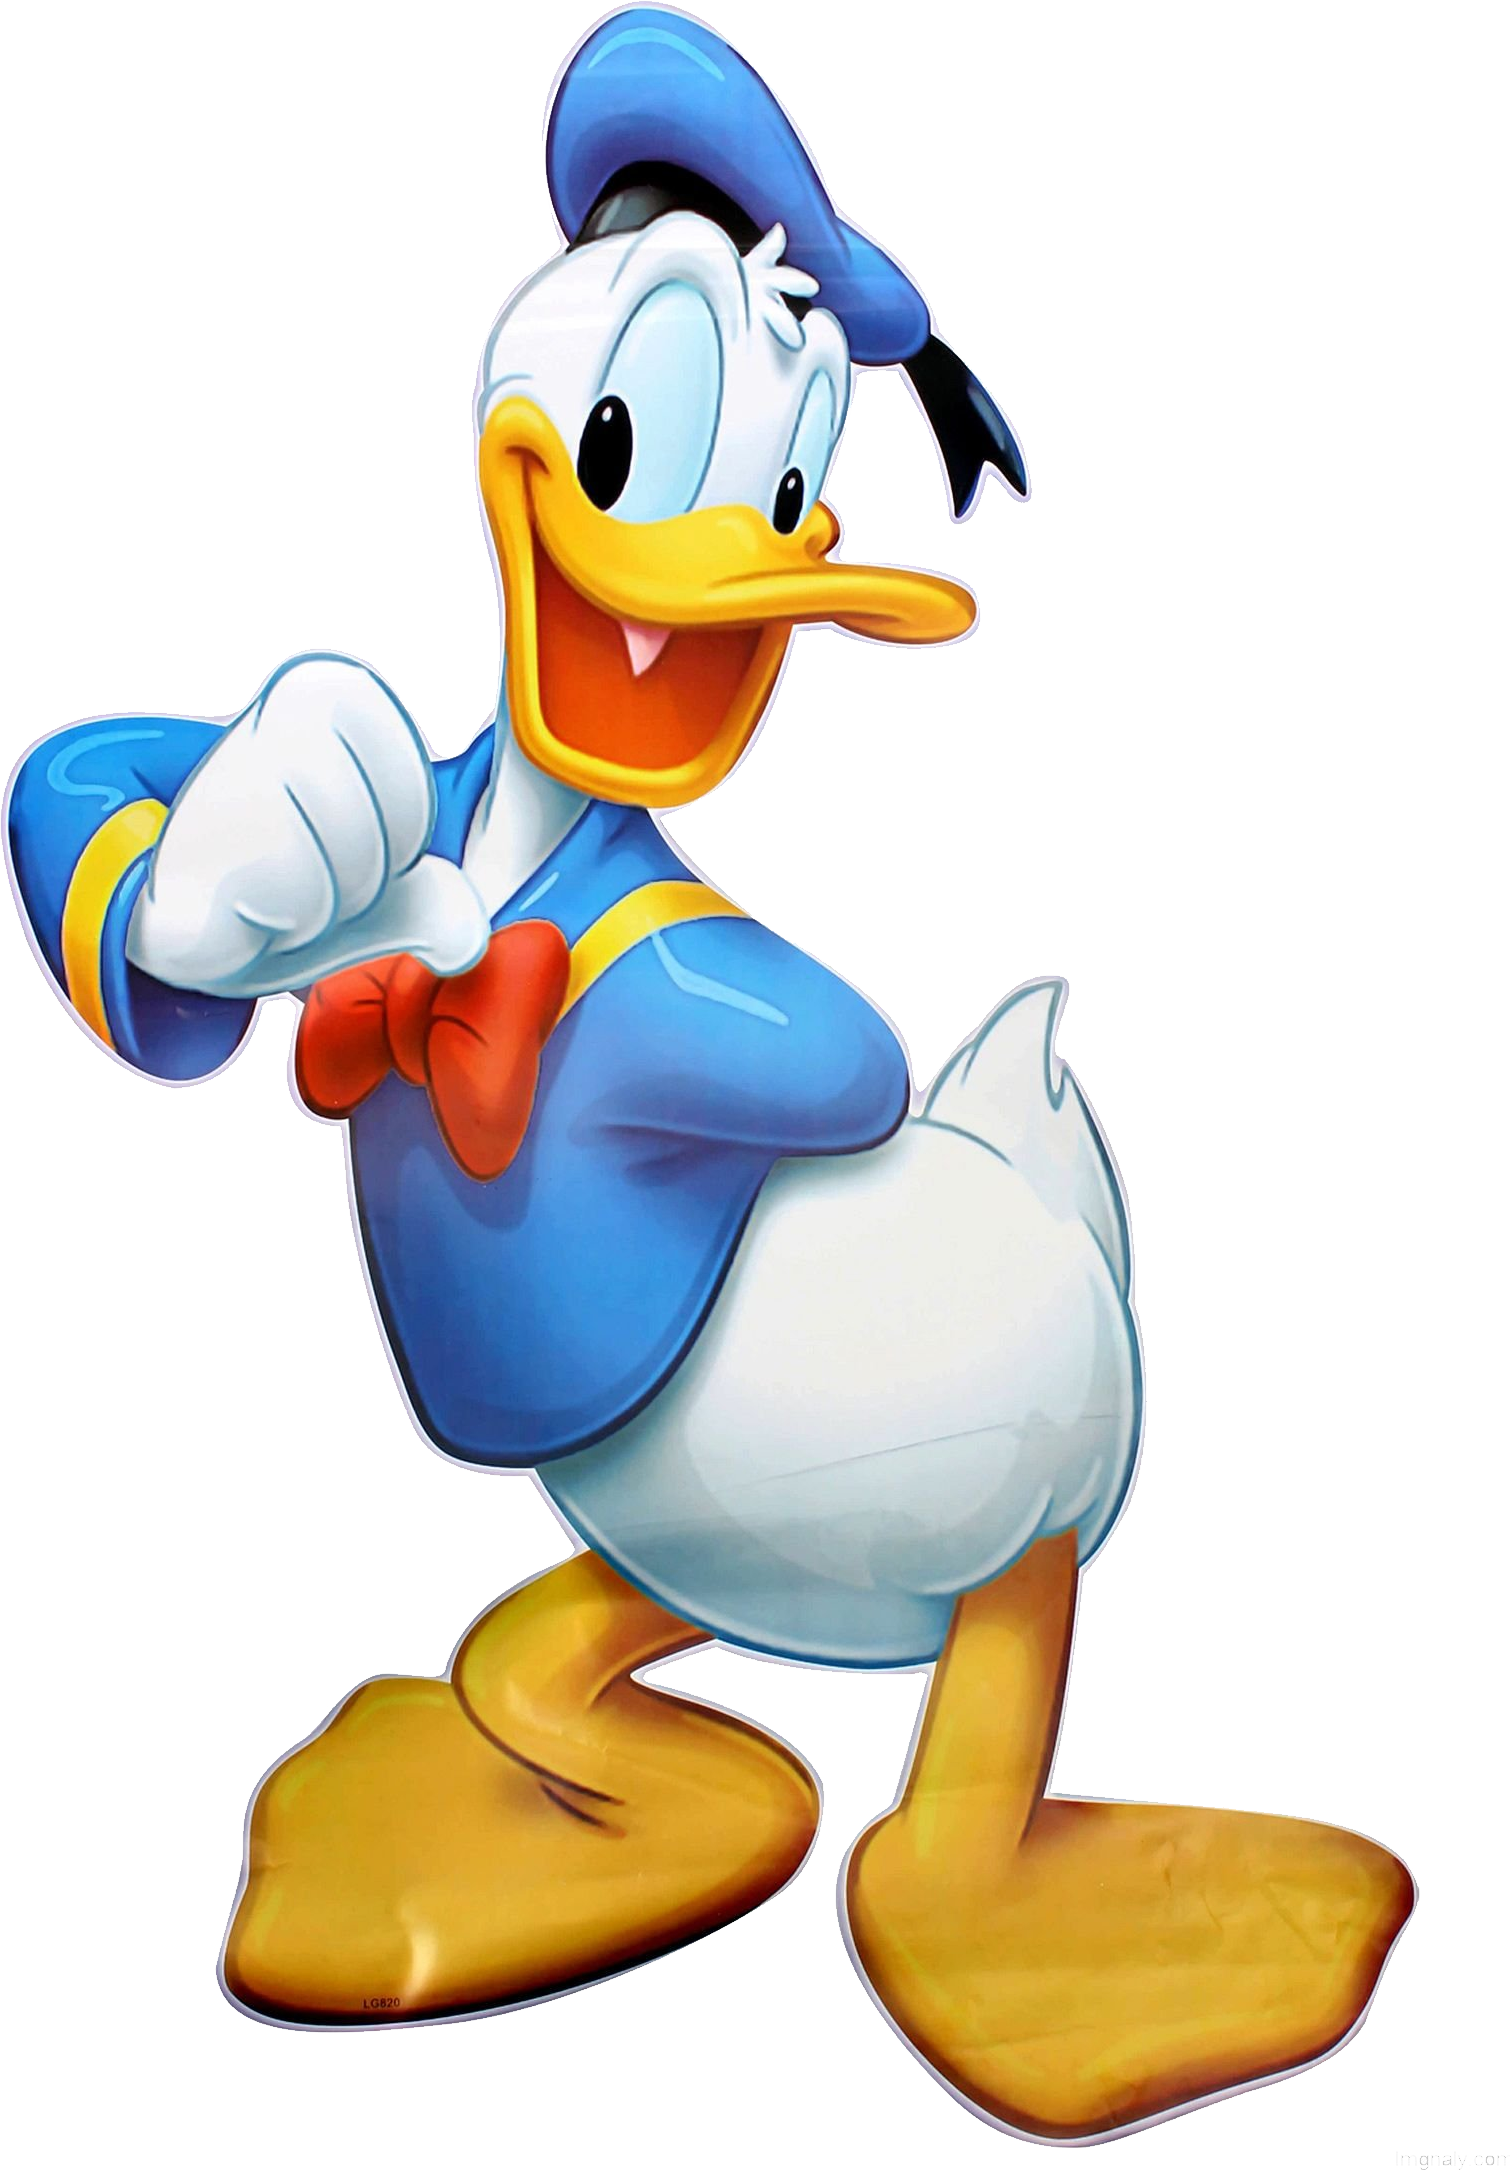 Donald Duck PNG pngteam.com